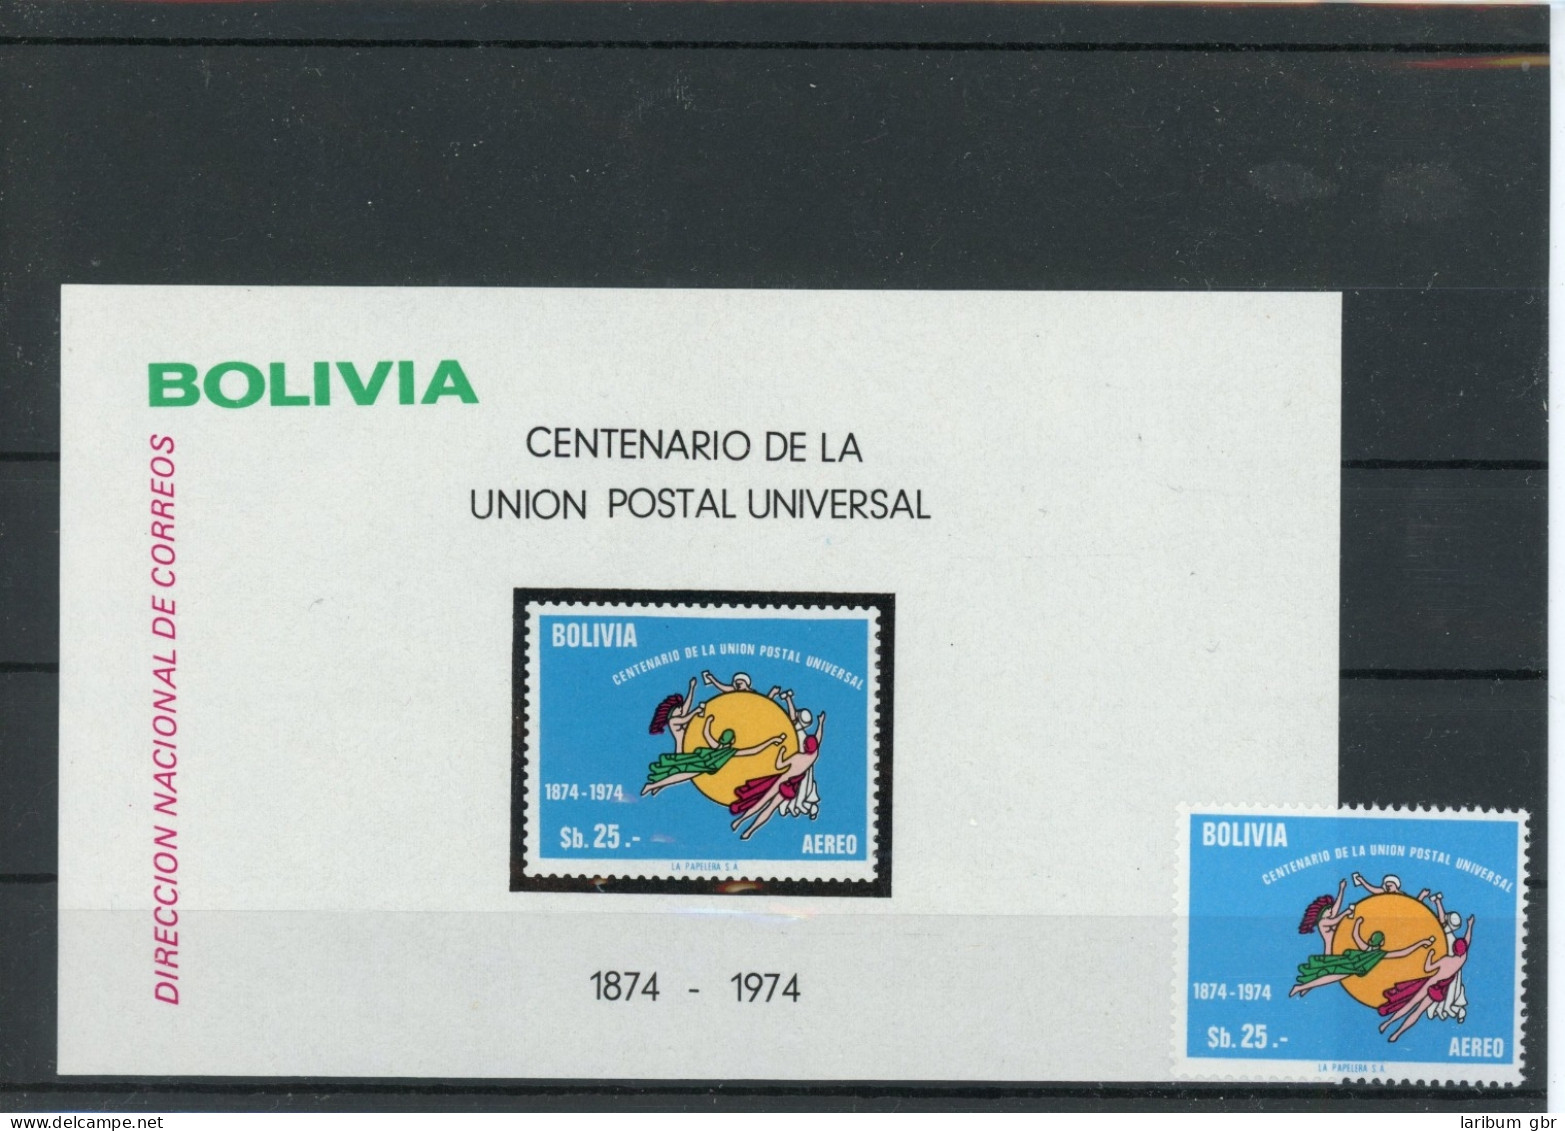 Bolivien 905, Block 65 Postfrisch UPU #HK878 - Bolivien